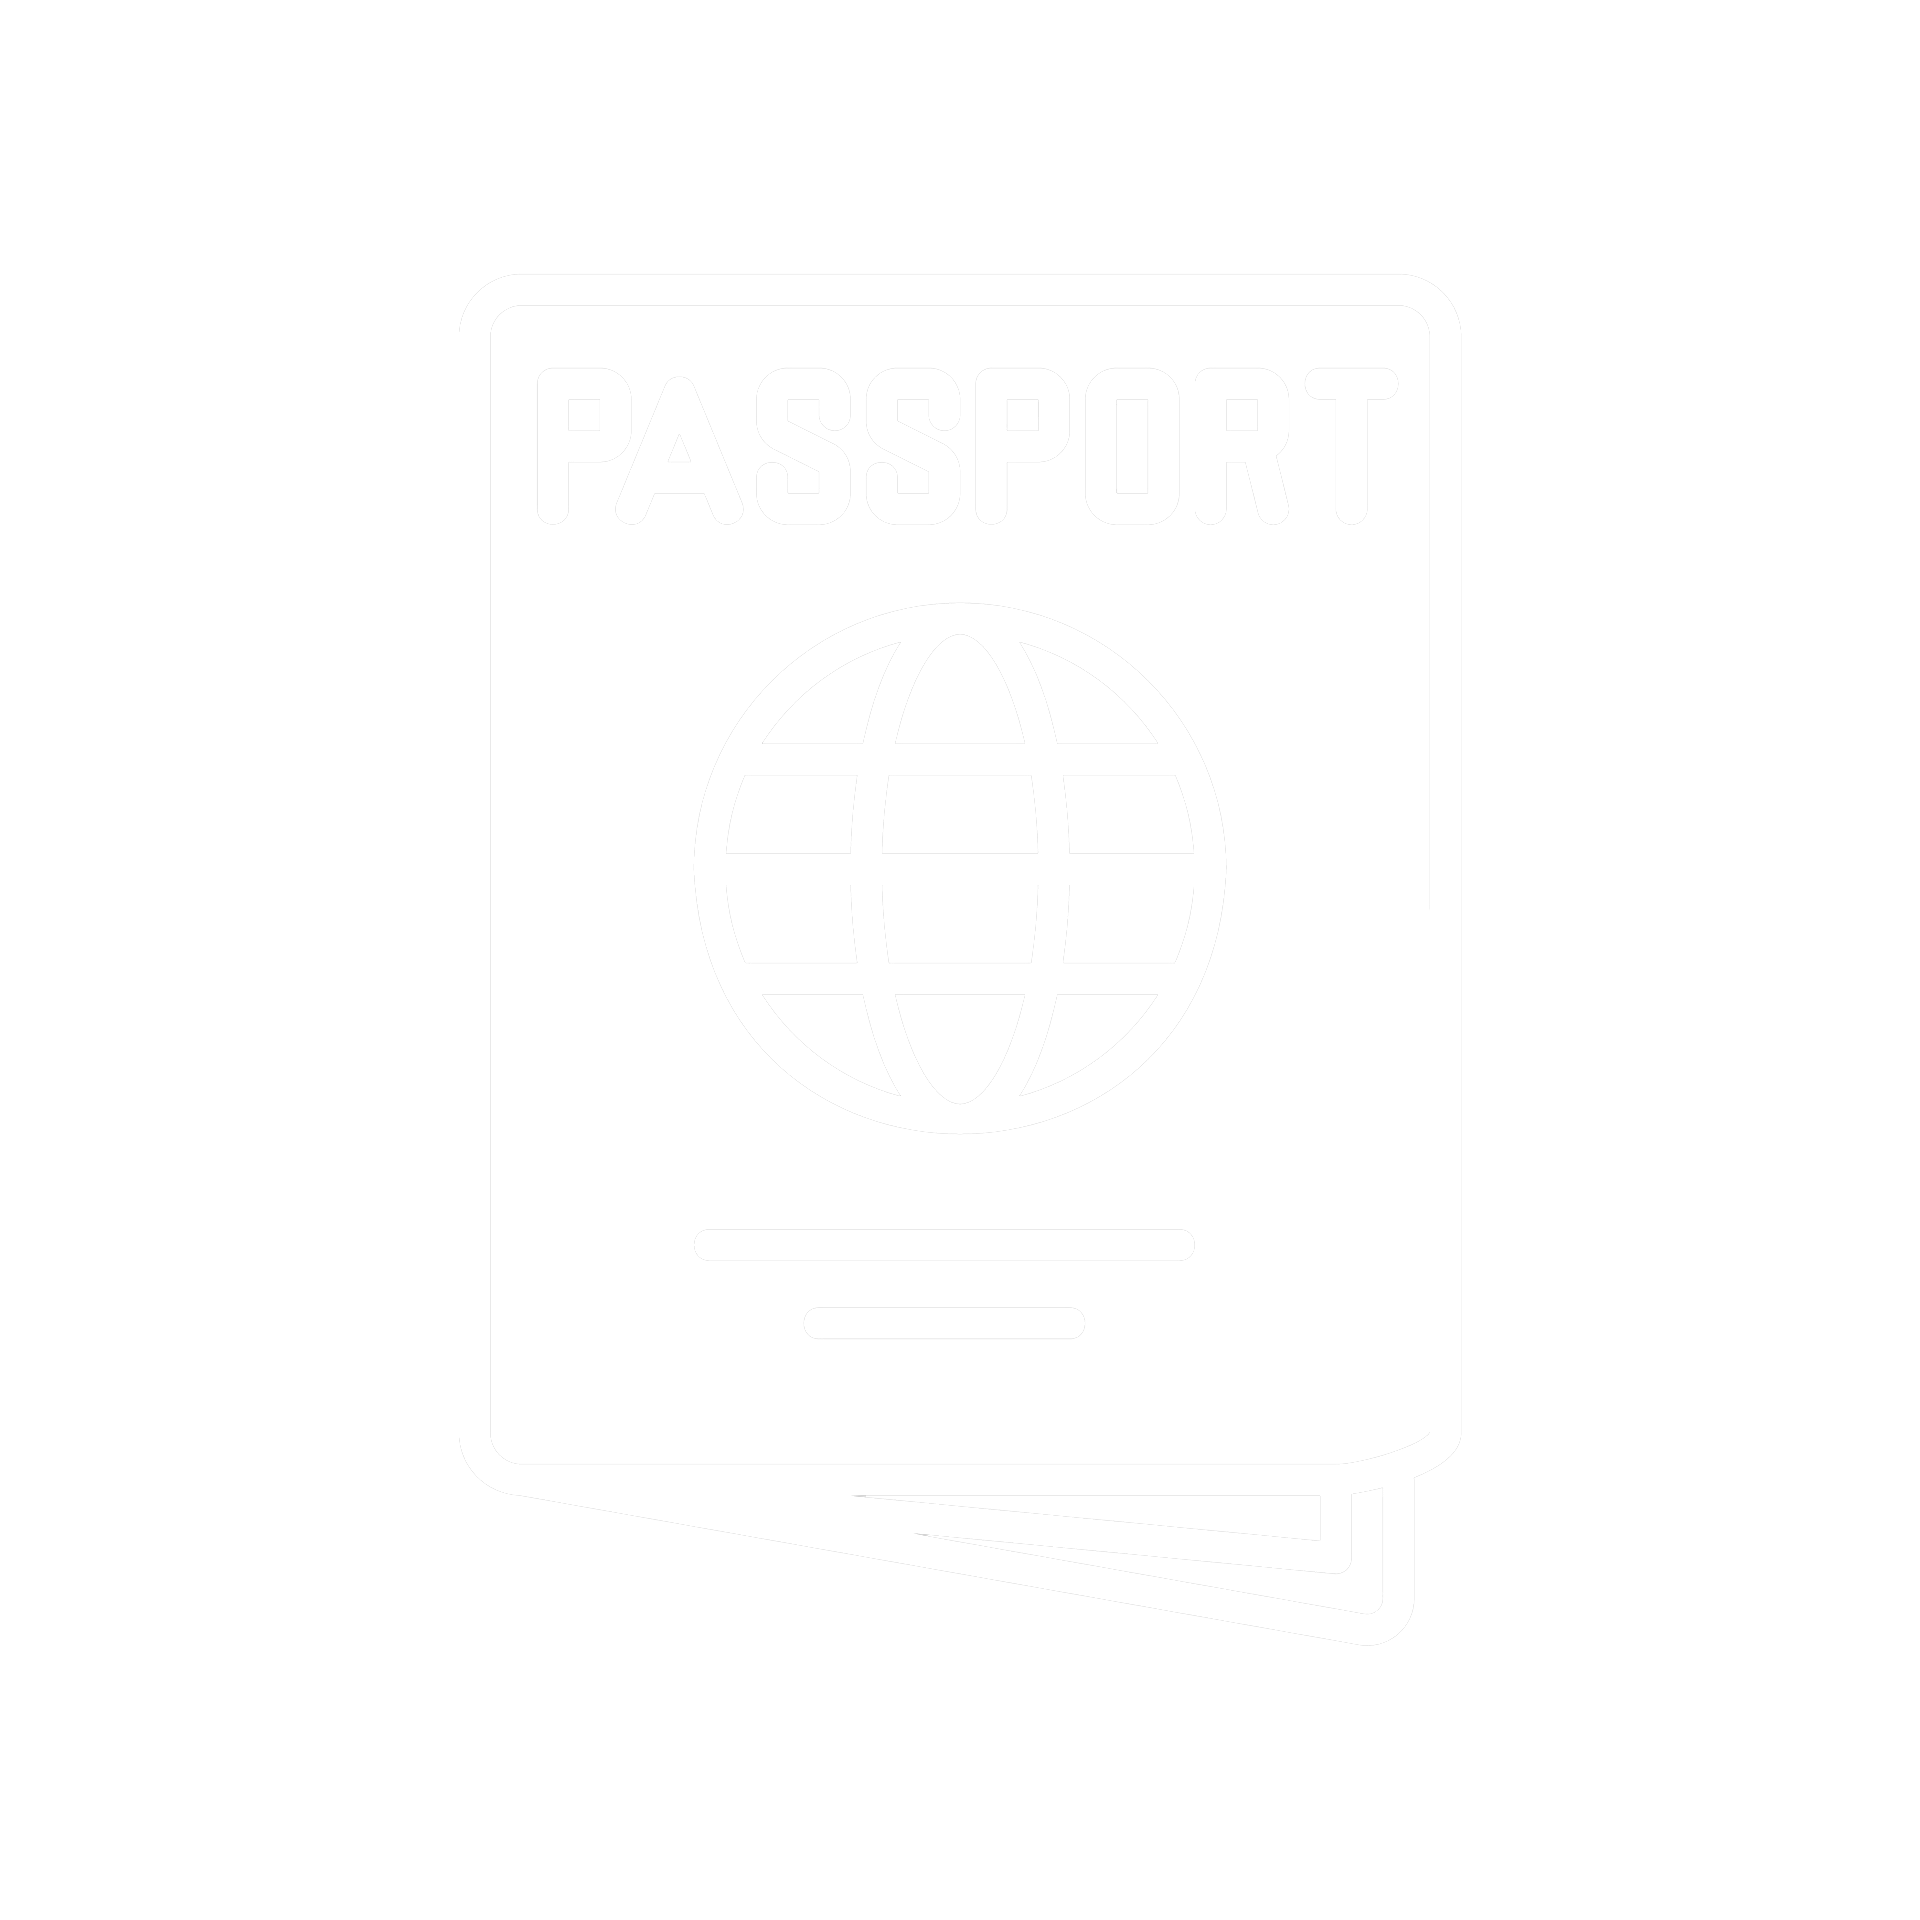 Visa Passport